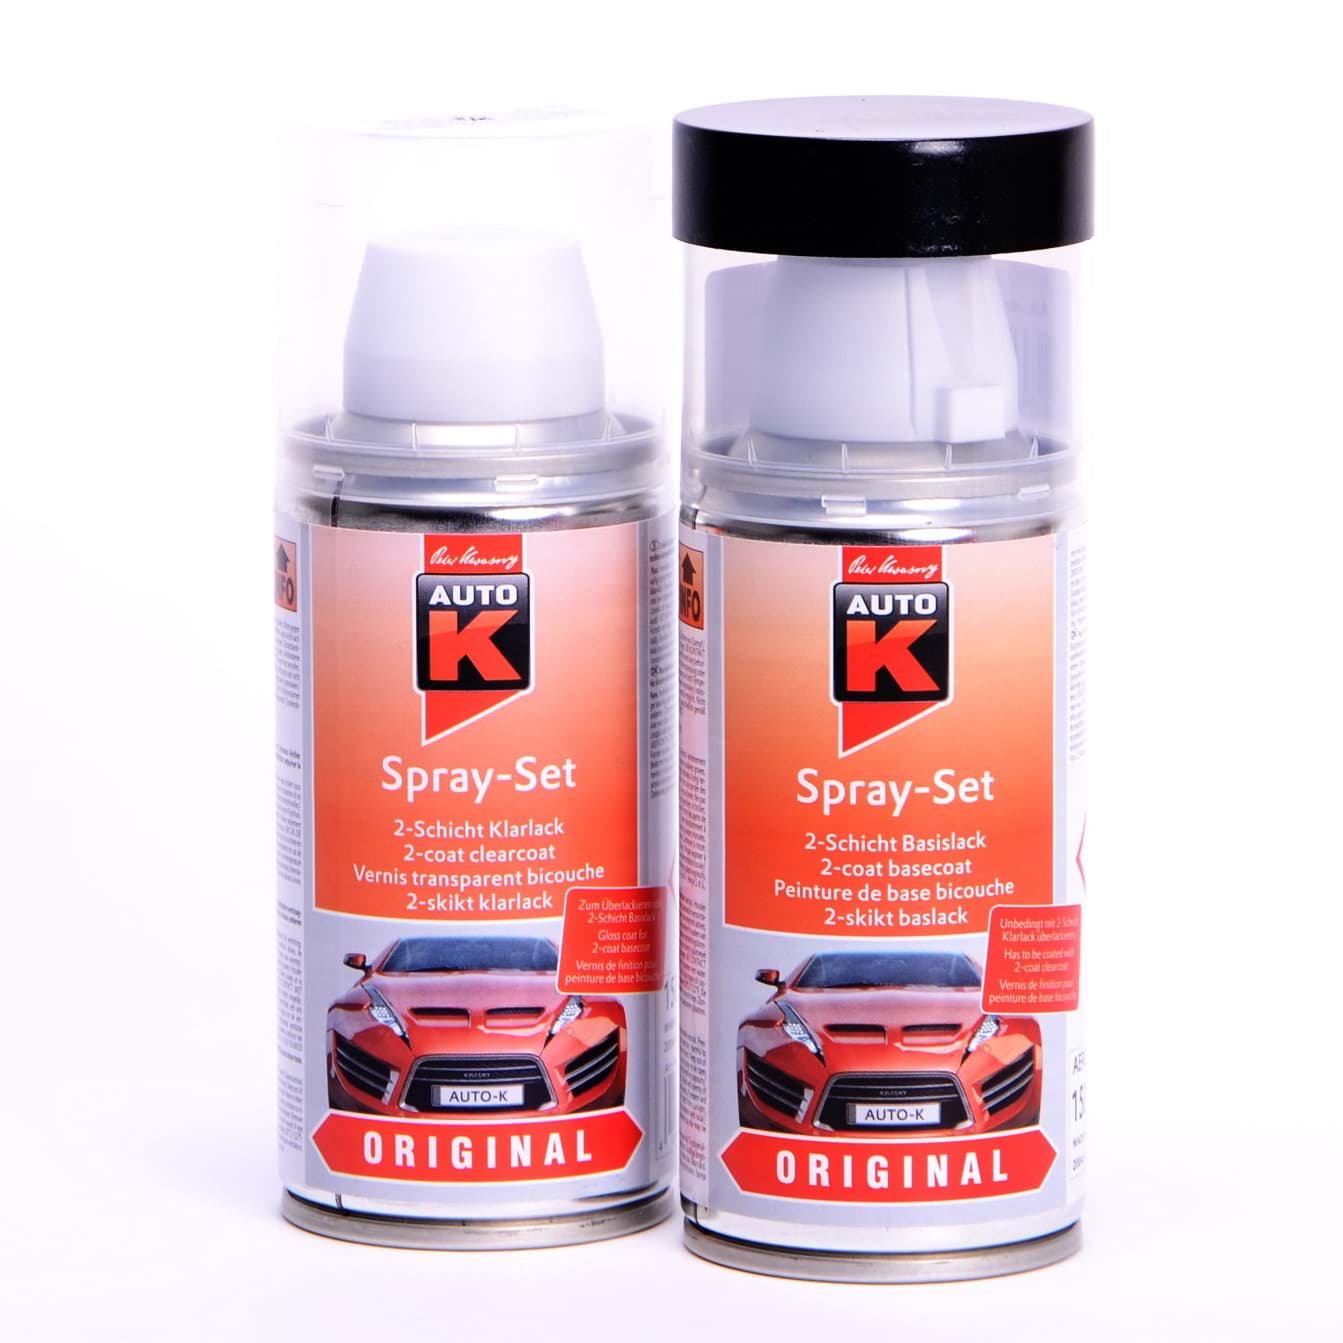 Afbeelding van Auto-K Spray-Set Autolack für Peugeot KMF Bleu Recife Nacre met 42370